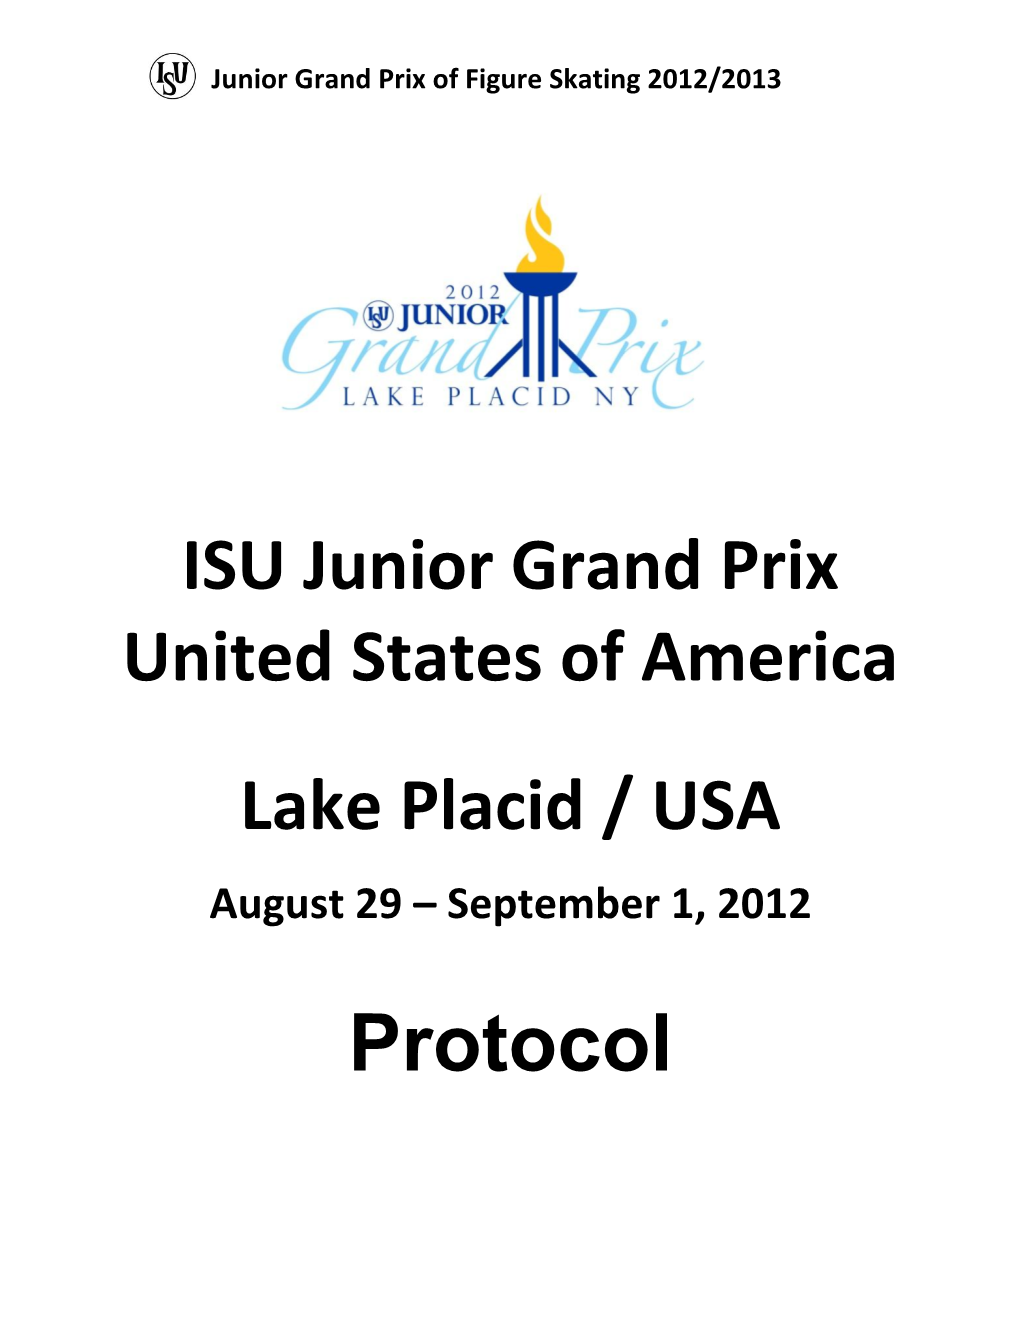 ISU Junior Grand Prix 2012 Lake Placid, NY